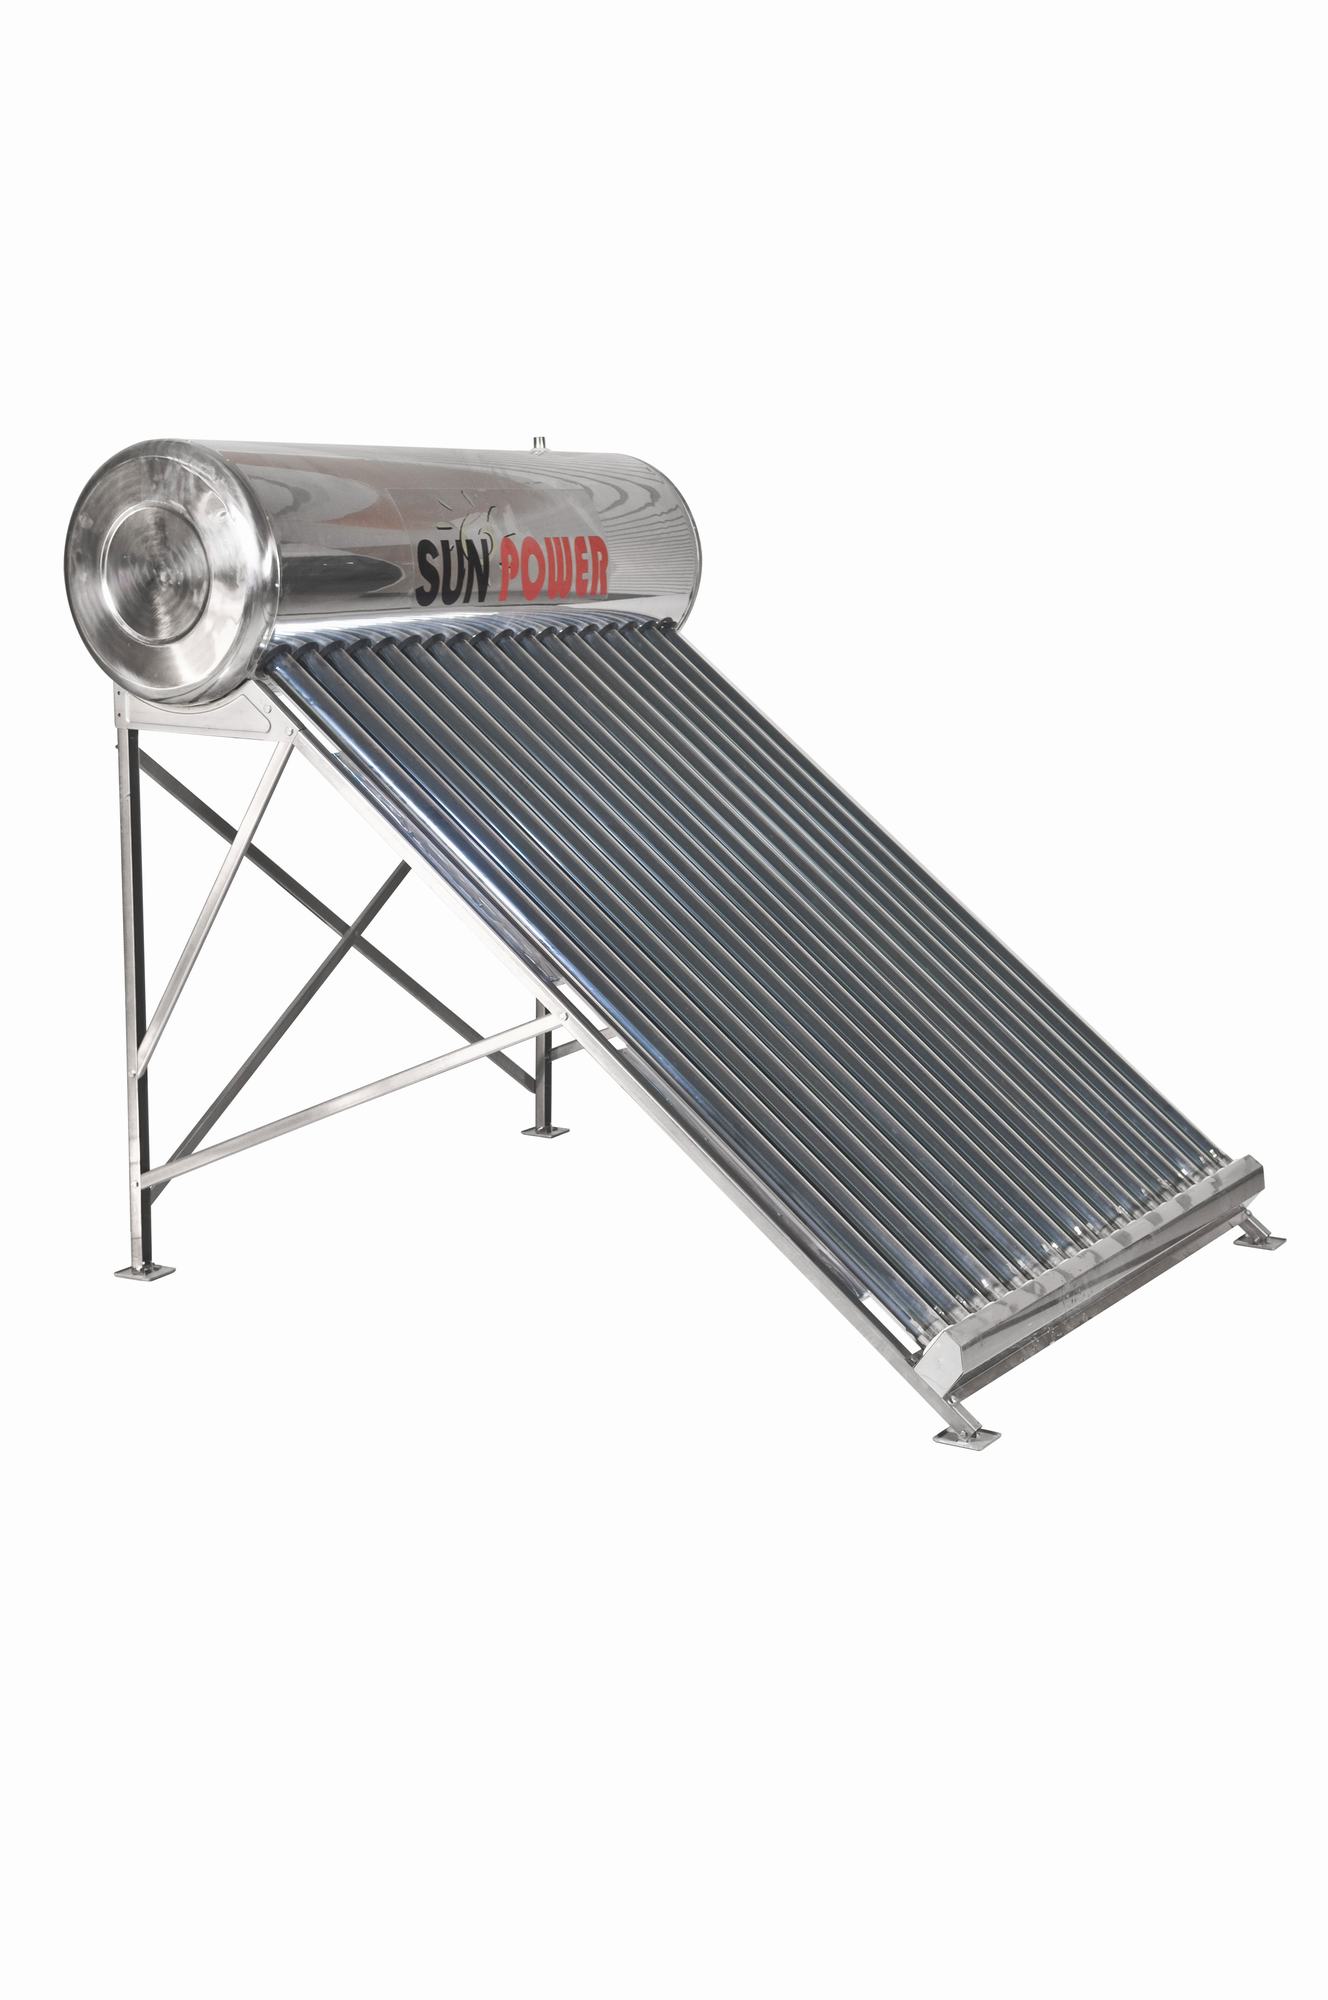 Non Pressure compact evacuated tube Solar Sater Heater